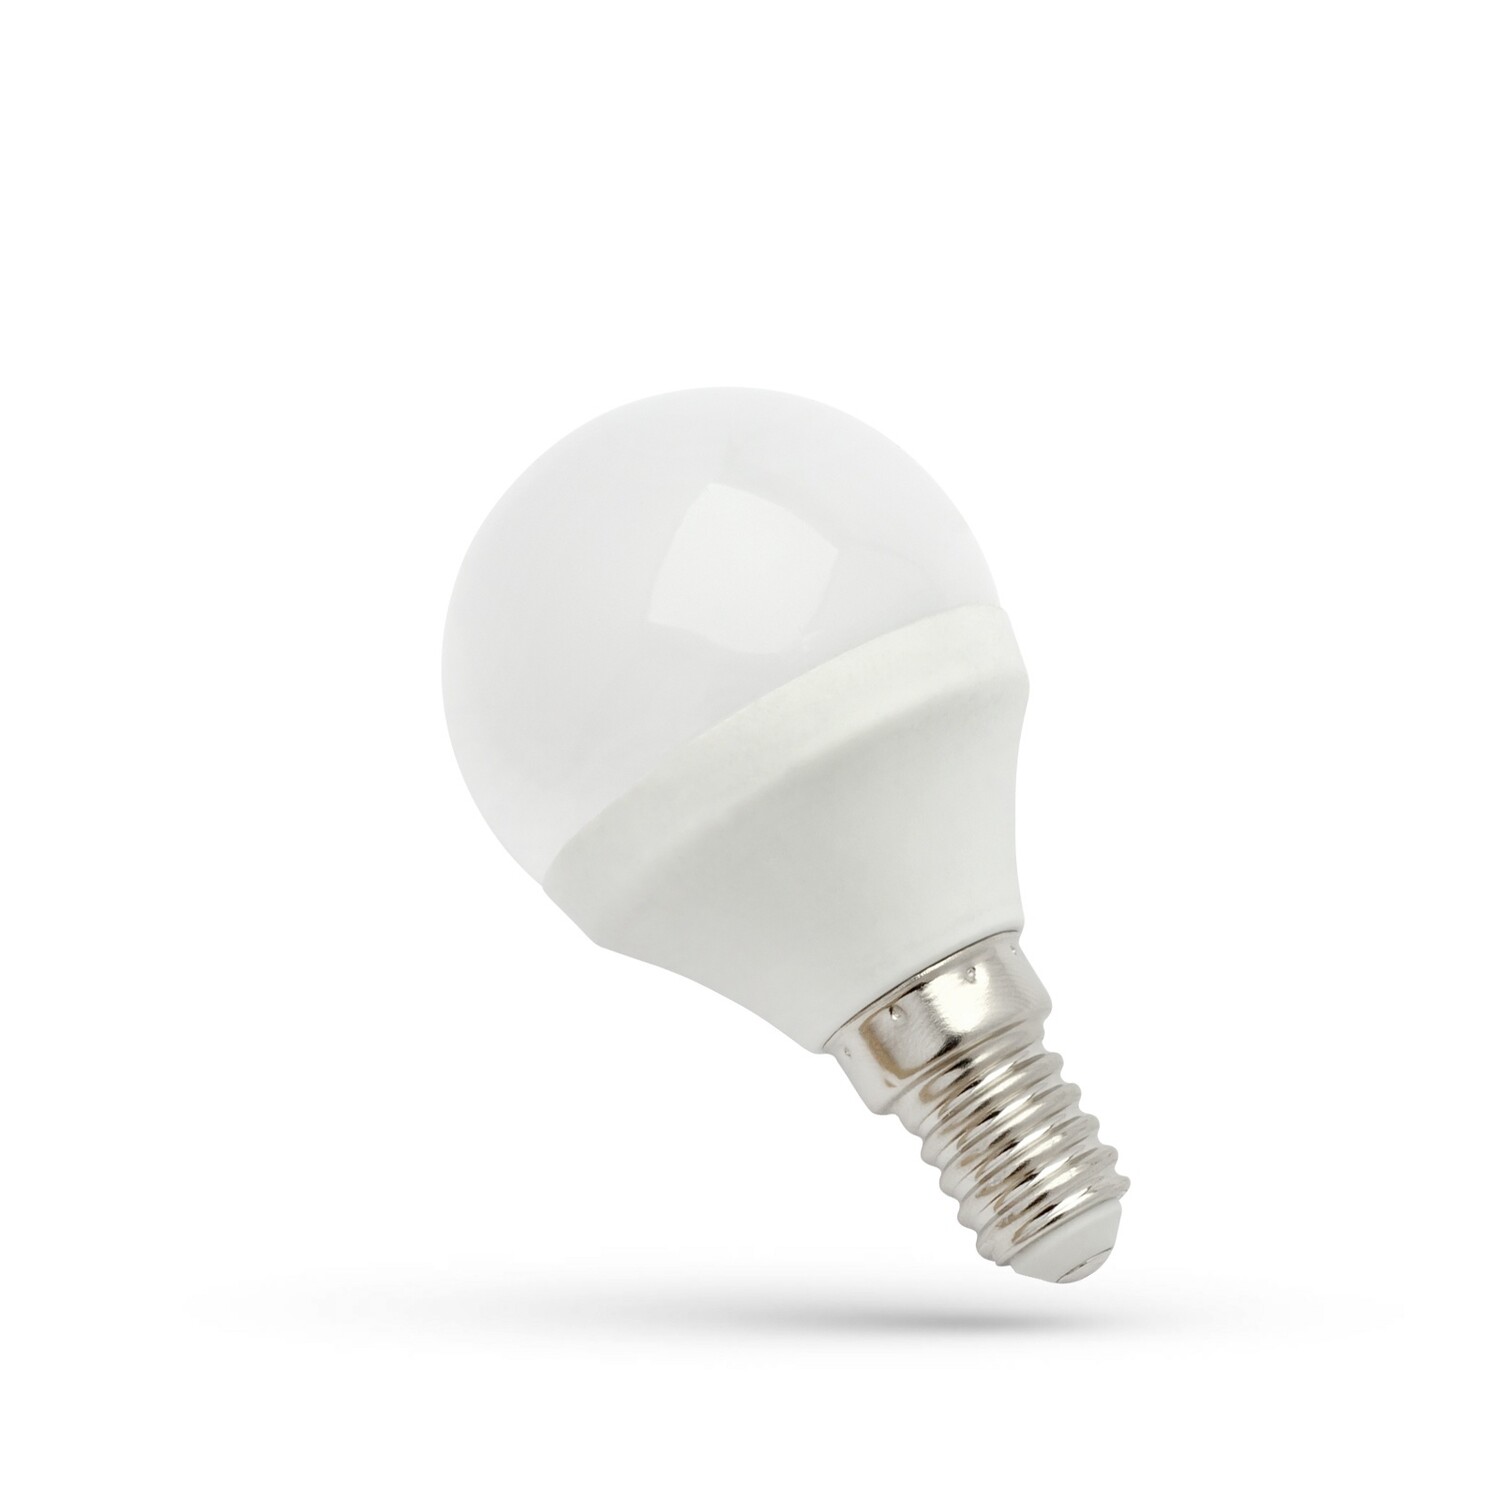 LED Lampe E14 - G45 - 6W entspricht 60W - 3000K Warmweiß 